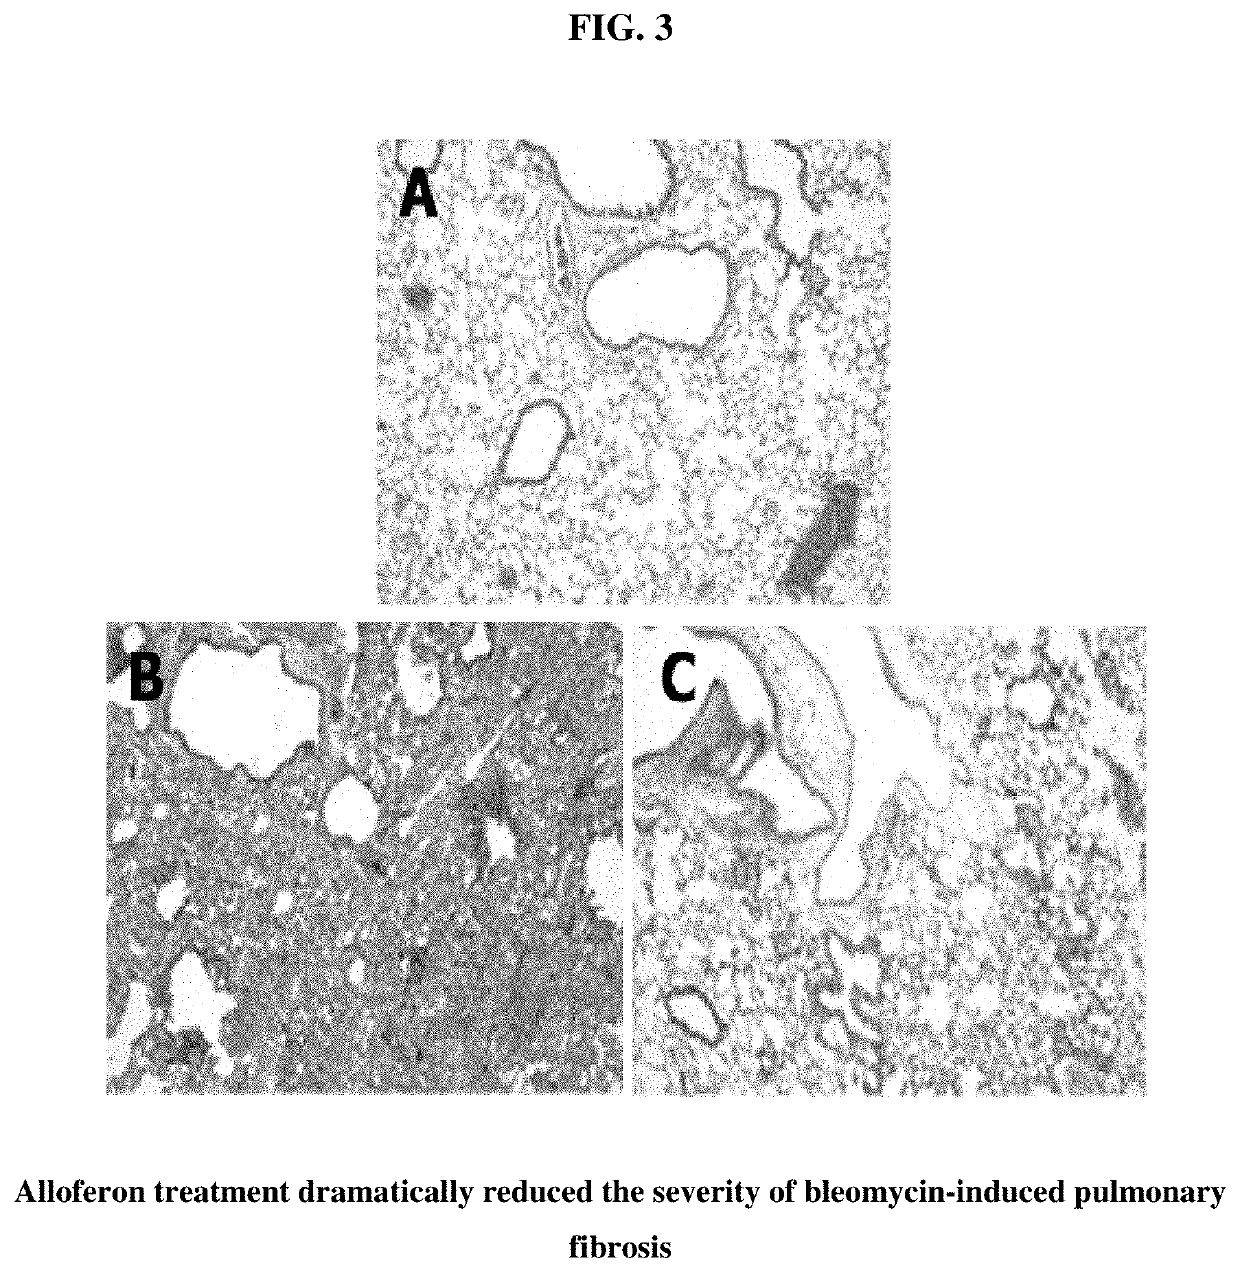 Composition for treating pulmonary fibrosis comprising alloferon